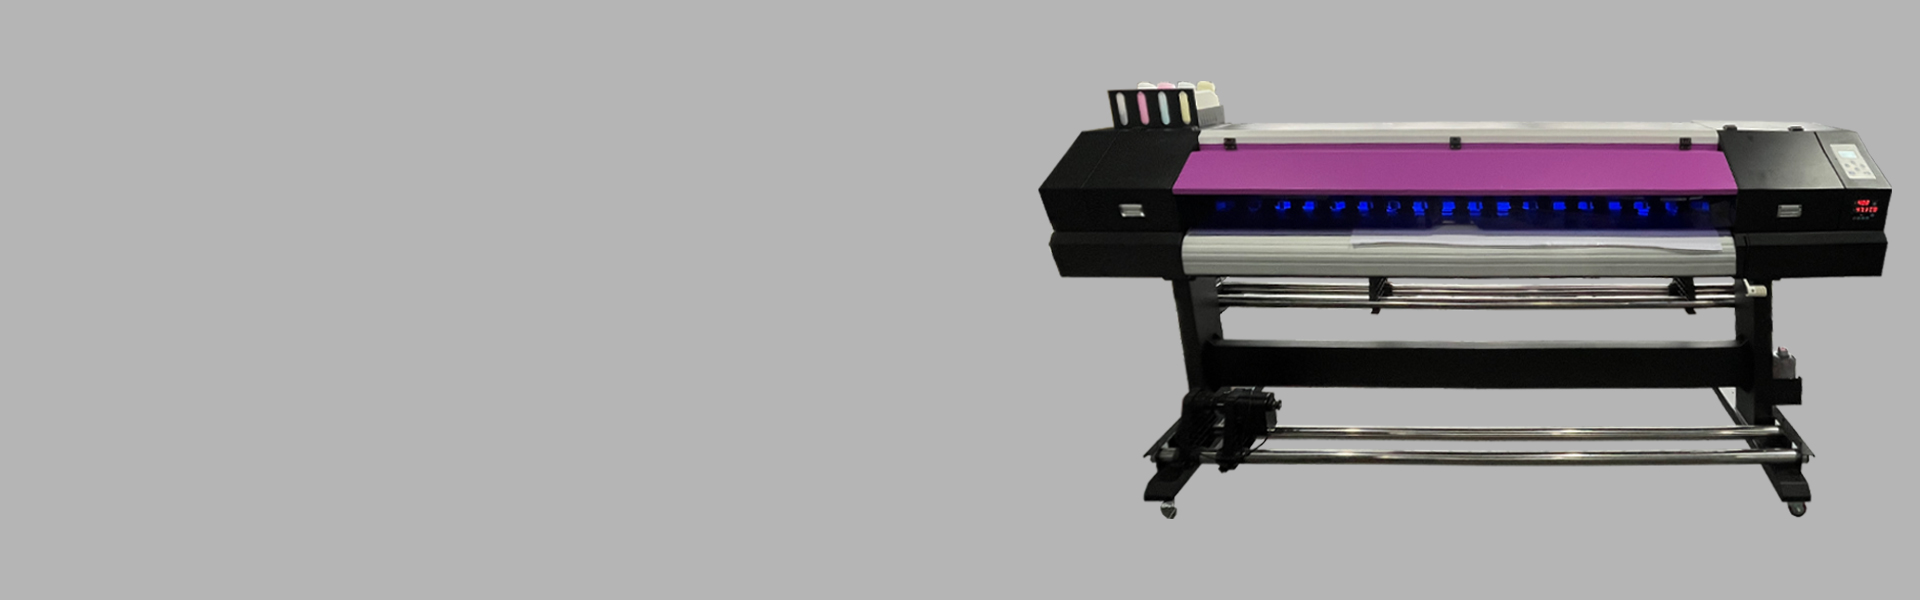 1.8m I1600-E1 Printer